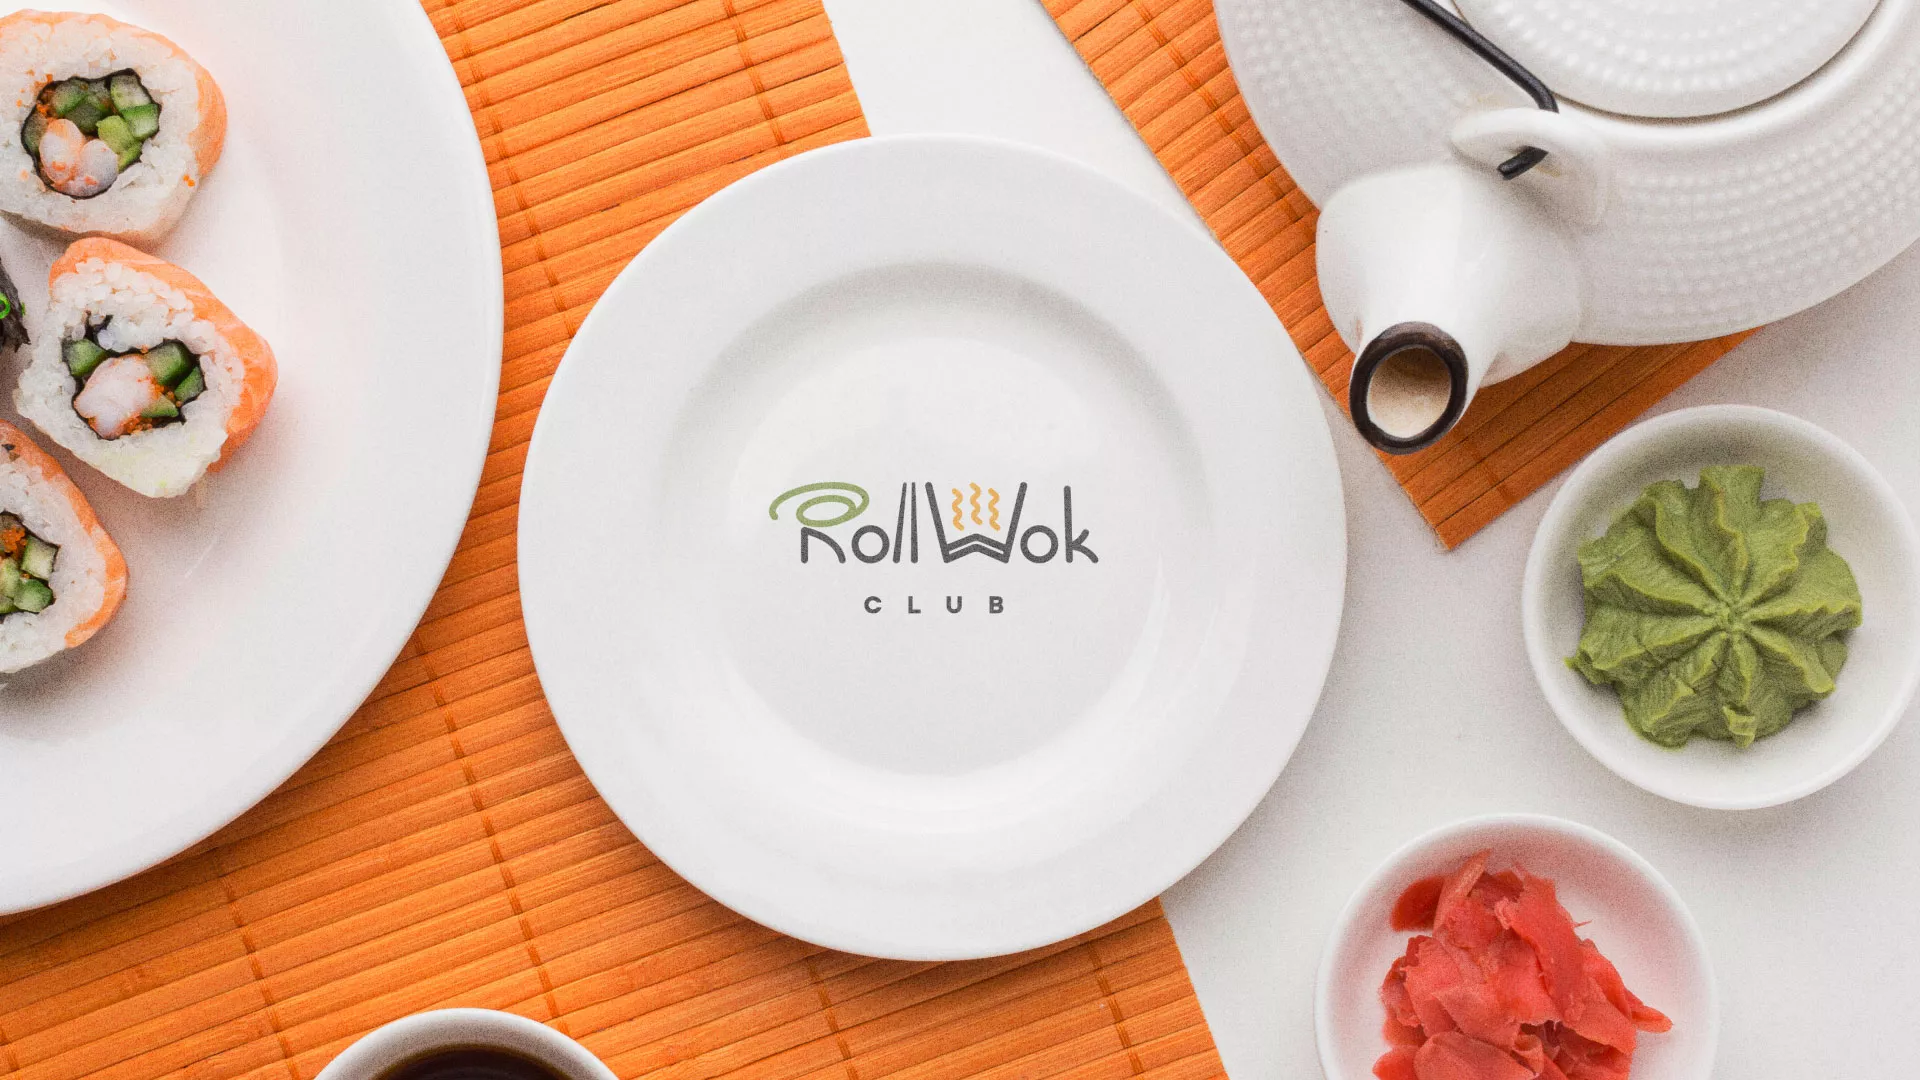 Разработка логотипа и фирменного стиля суши-бара «Roll Wok Club» в Ломоносове